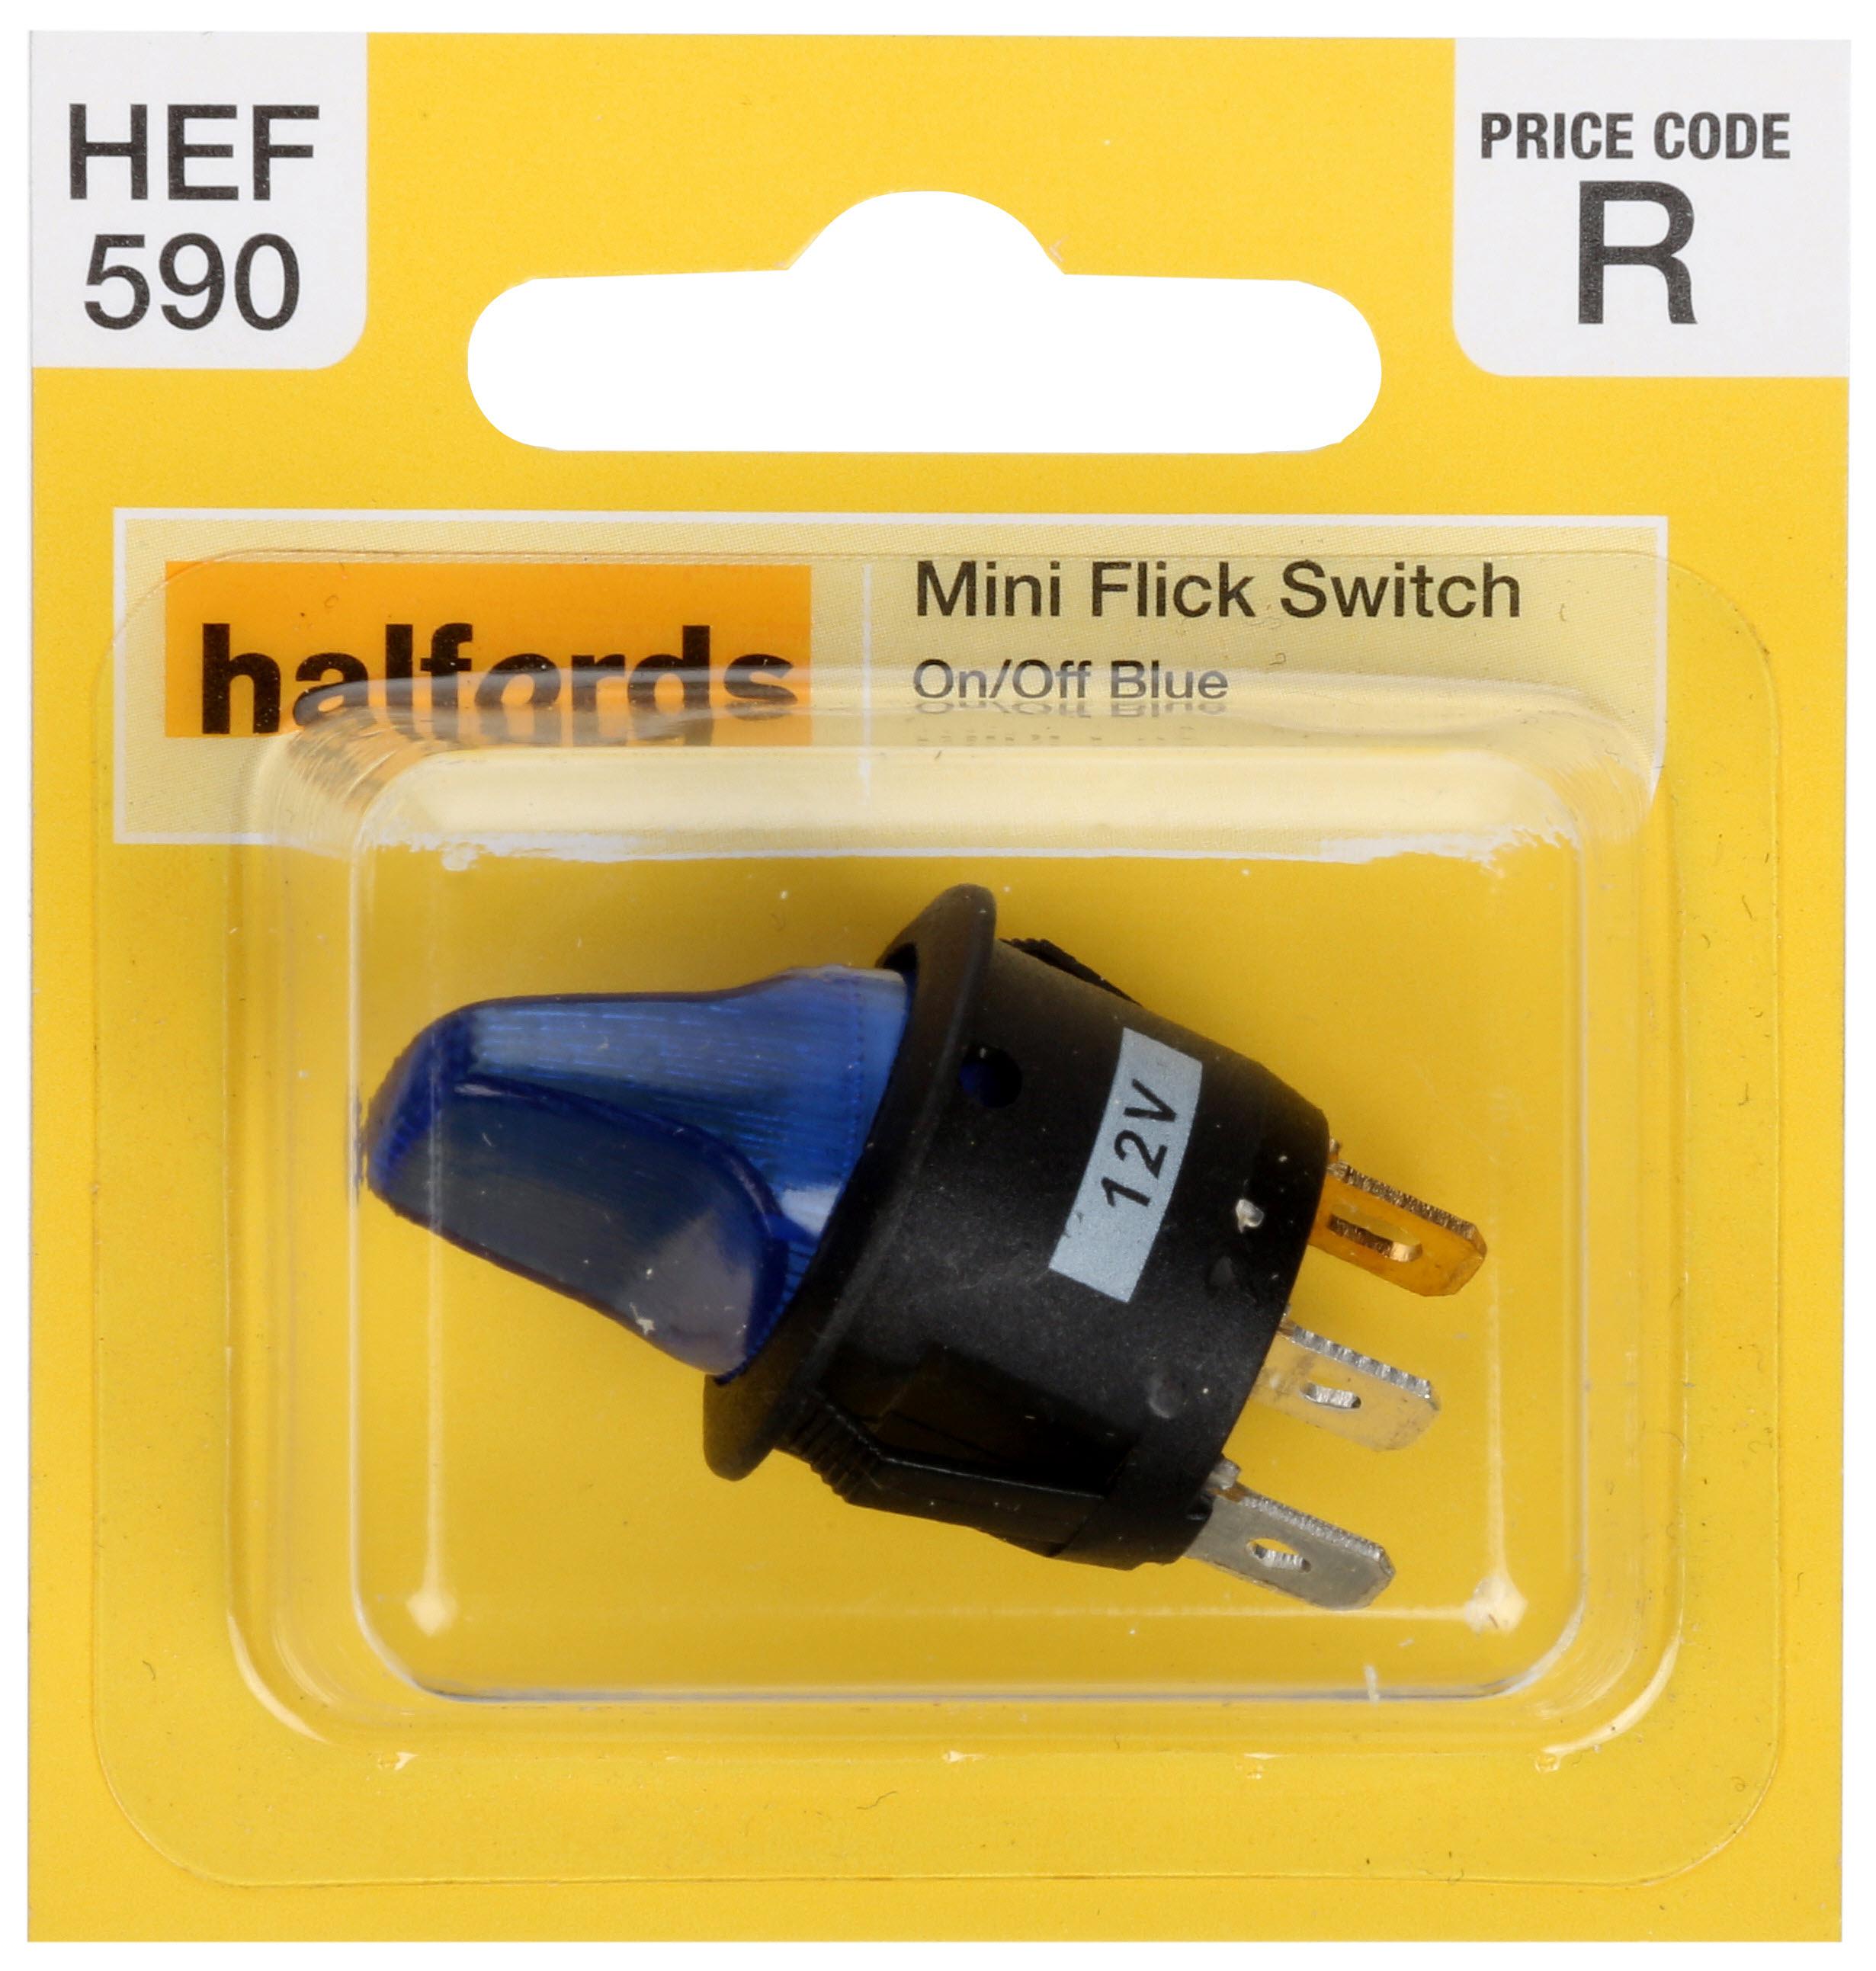 Halfords Mini Flick Switch On/Off Illuminated Blue (Hef590)